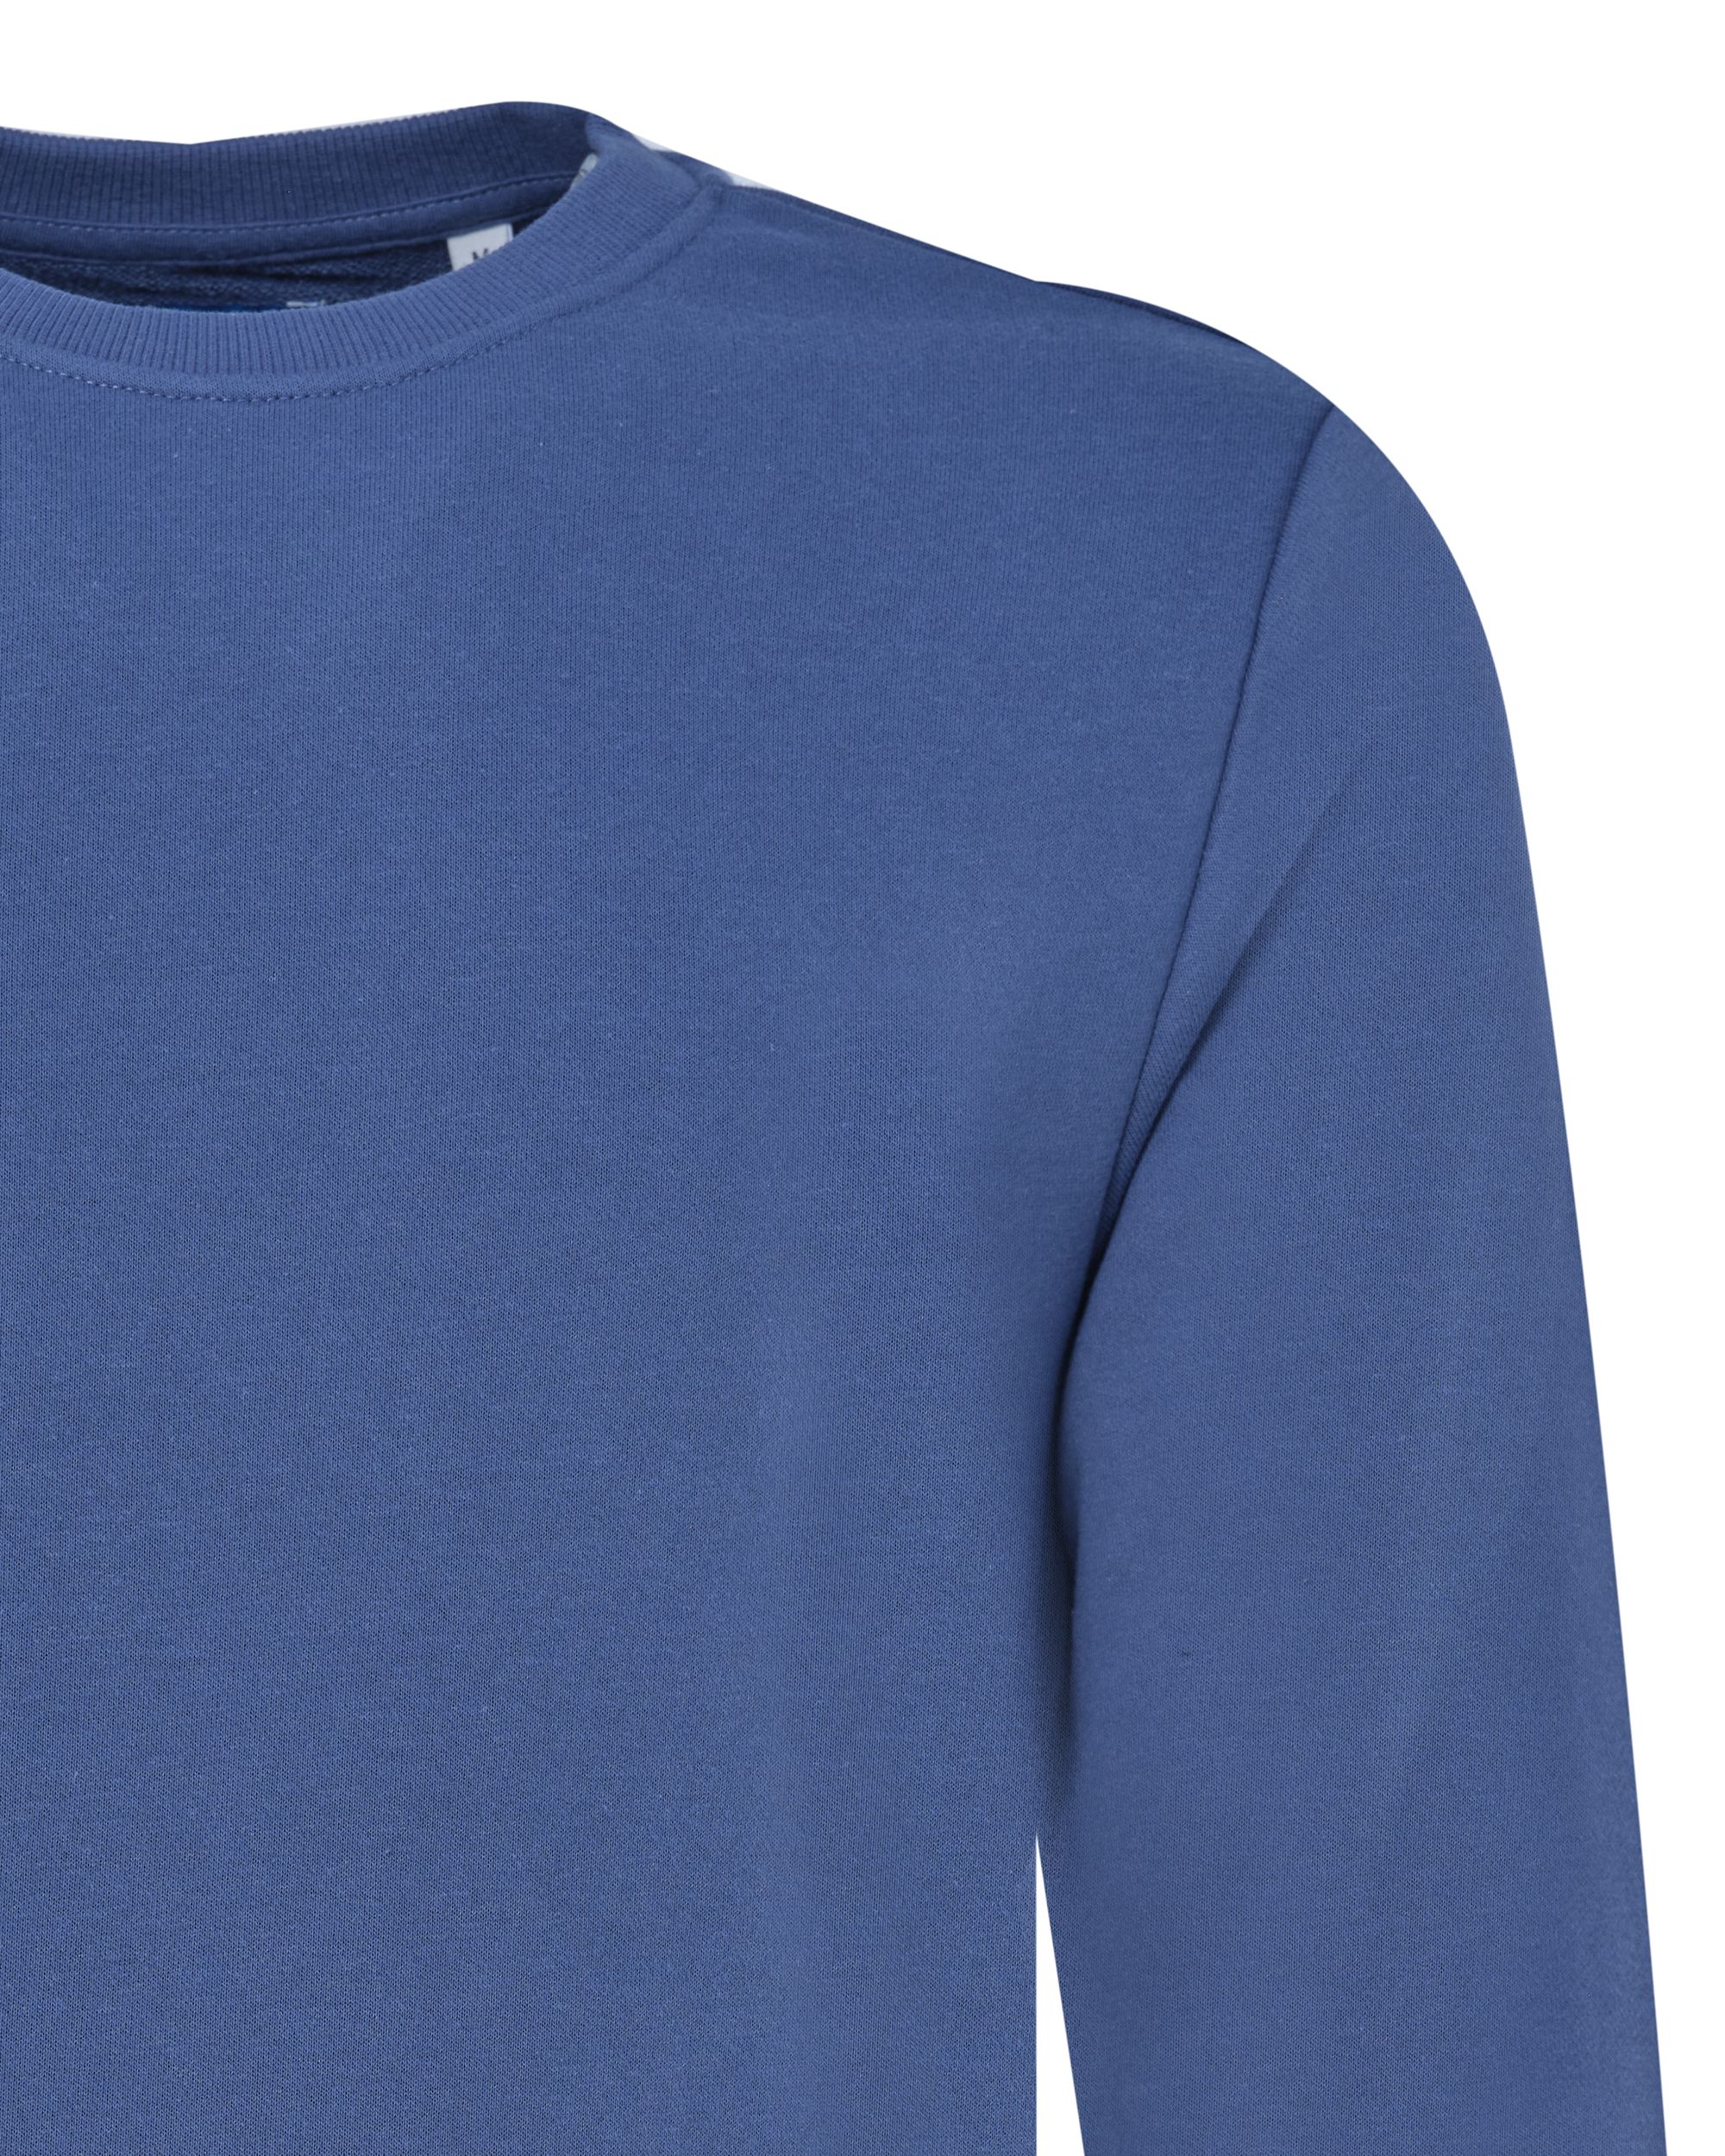 The BLUEPRINT Premium Sweater Blue Marine 078208-005-L